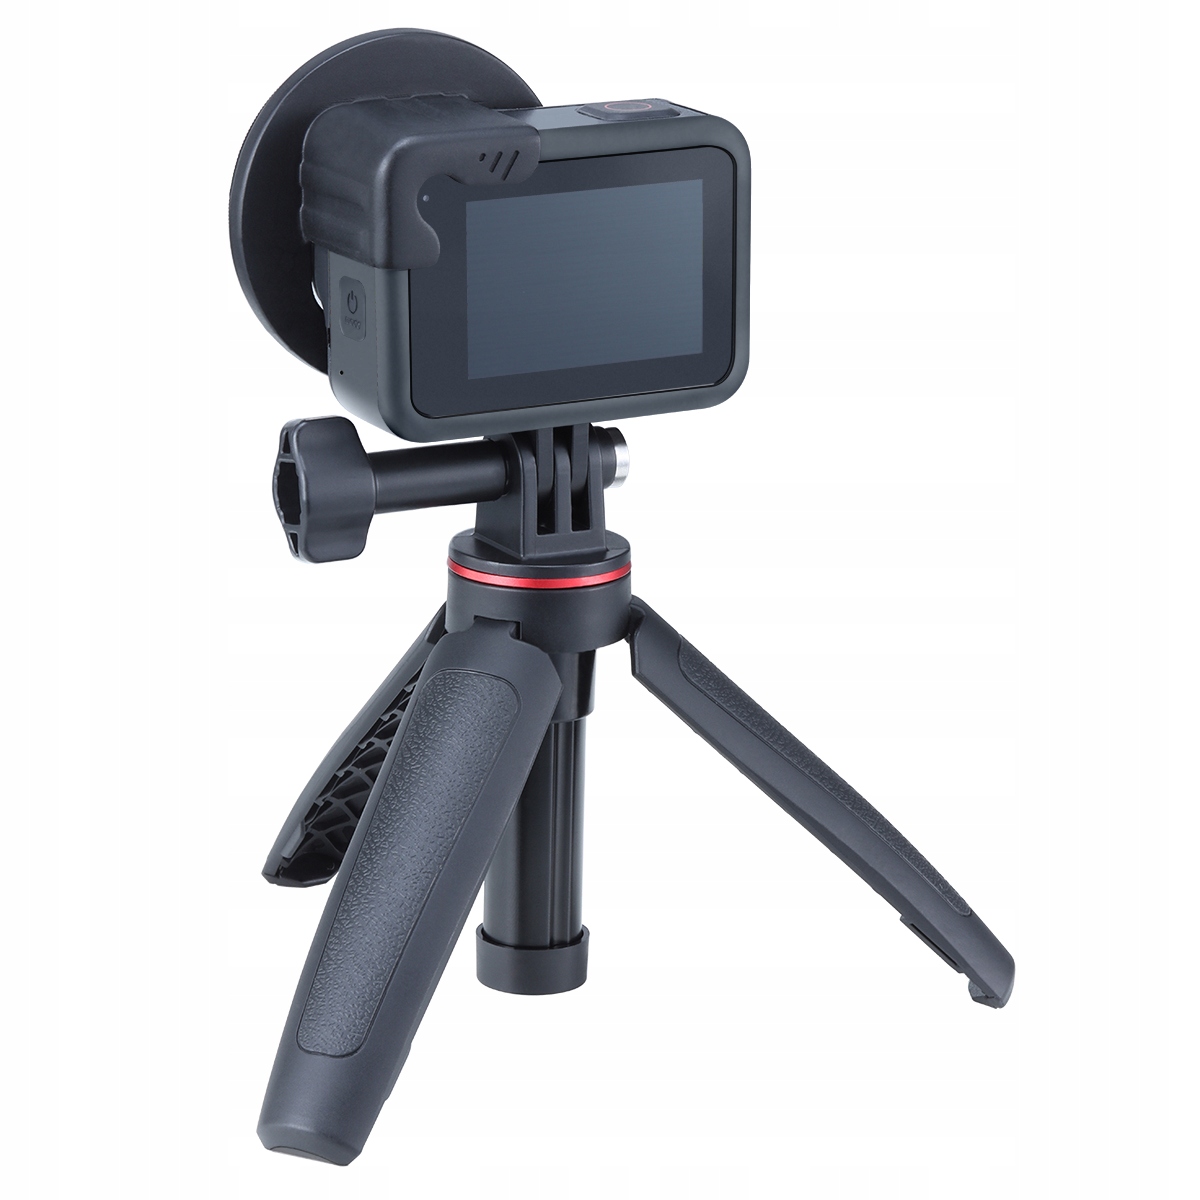 Akcesoria do kamer GoPro i SJCAM : Adapter / Uchwyt na Filtr 52mm 